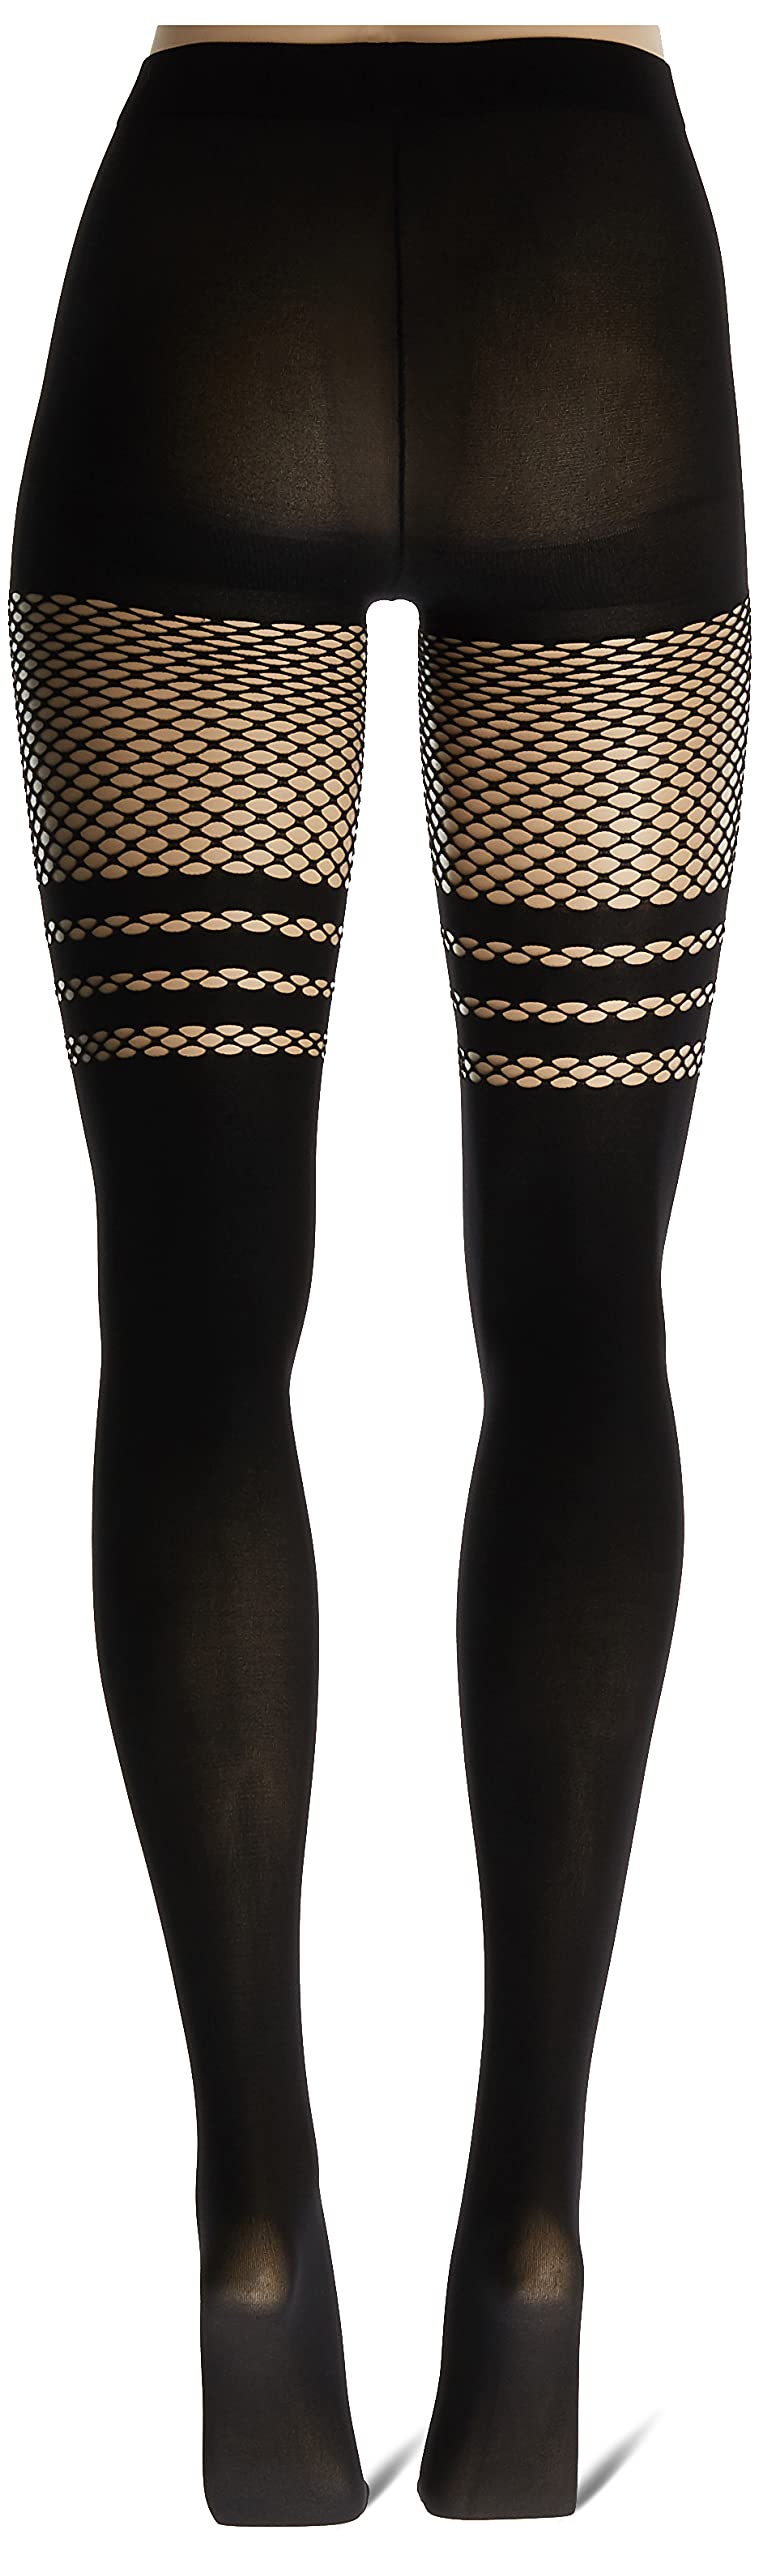 Leg Avenue Women's Striped Fishnet, Black, One Size